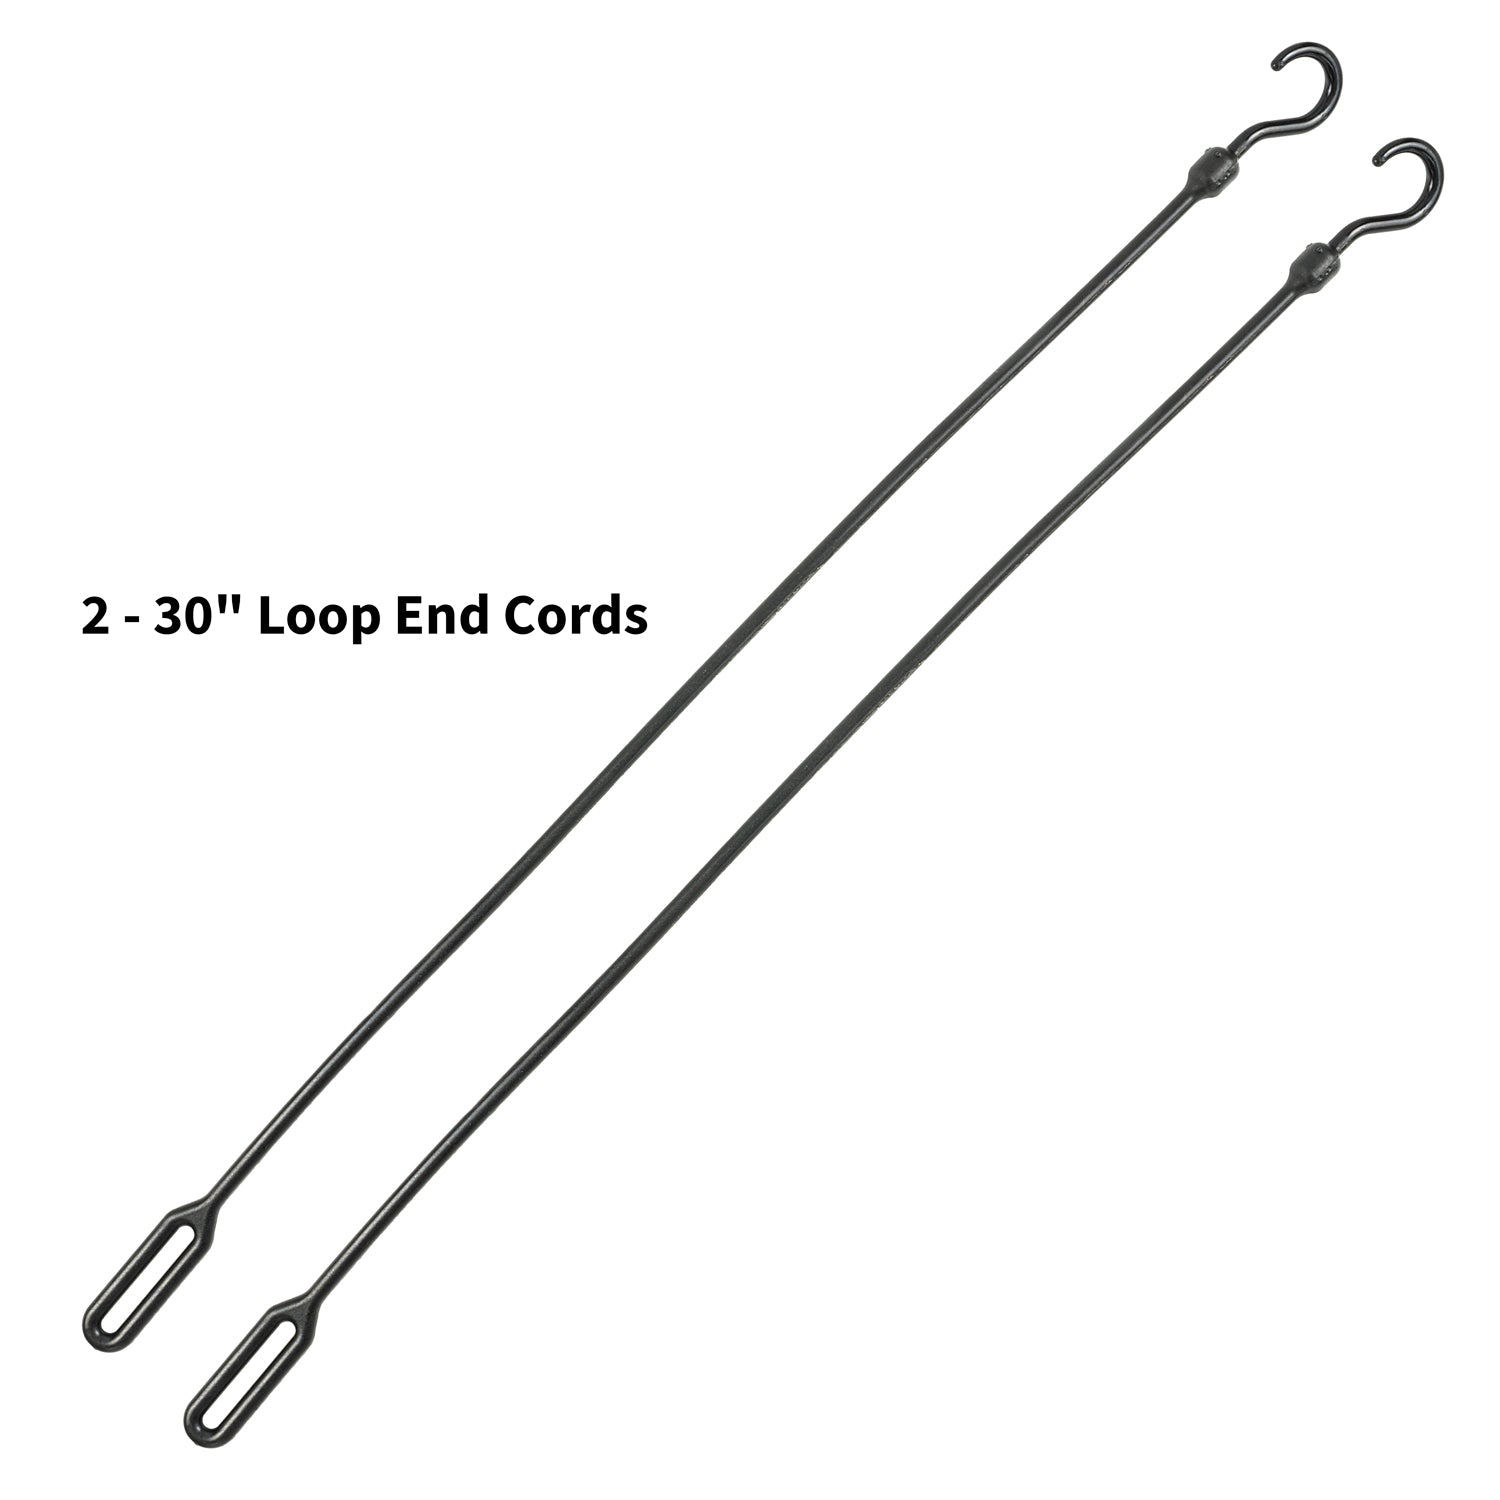 8pc Variety Pack - Easy Stretch Cords - BIHLERFLEX- Premium Tie-Down Products